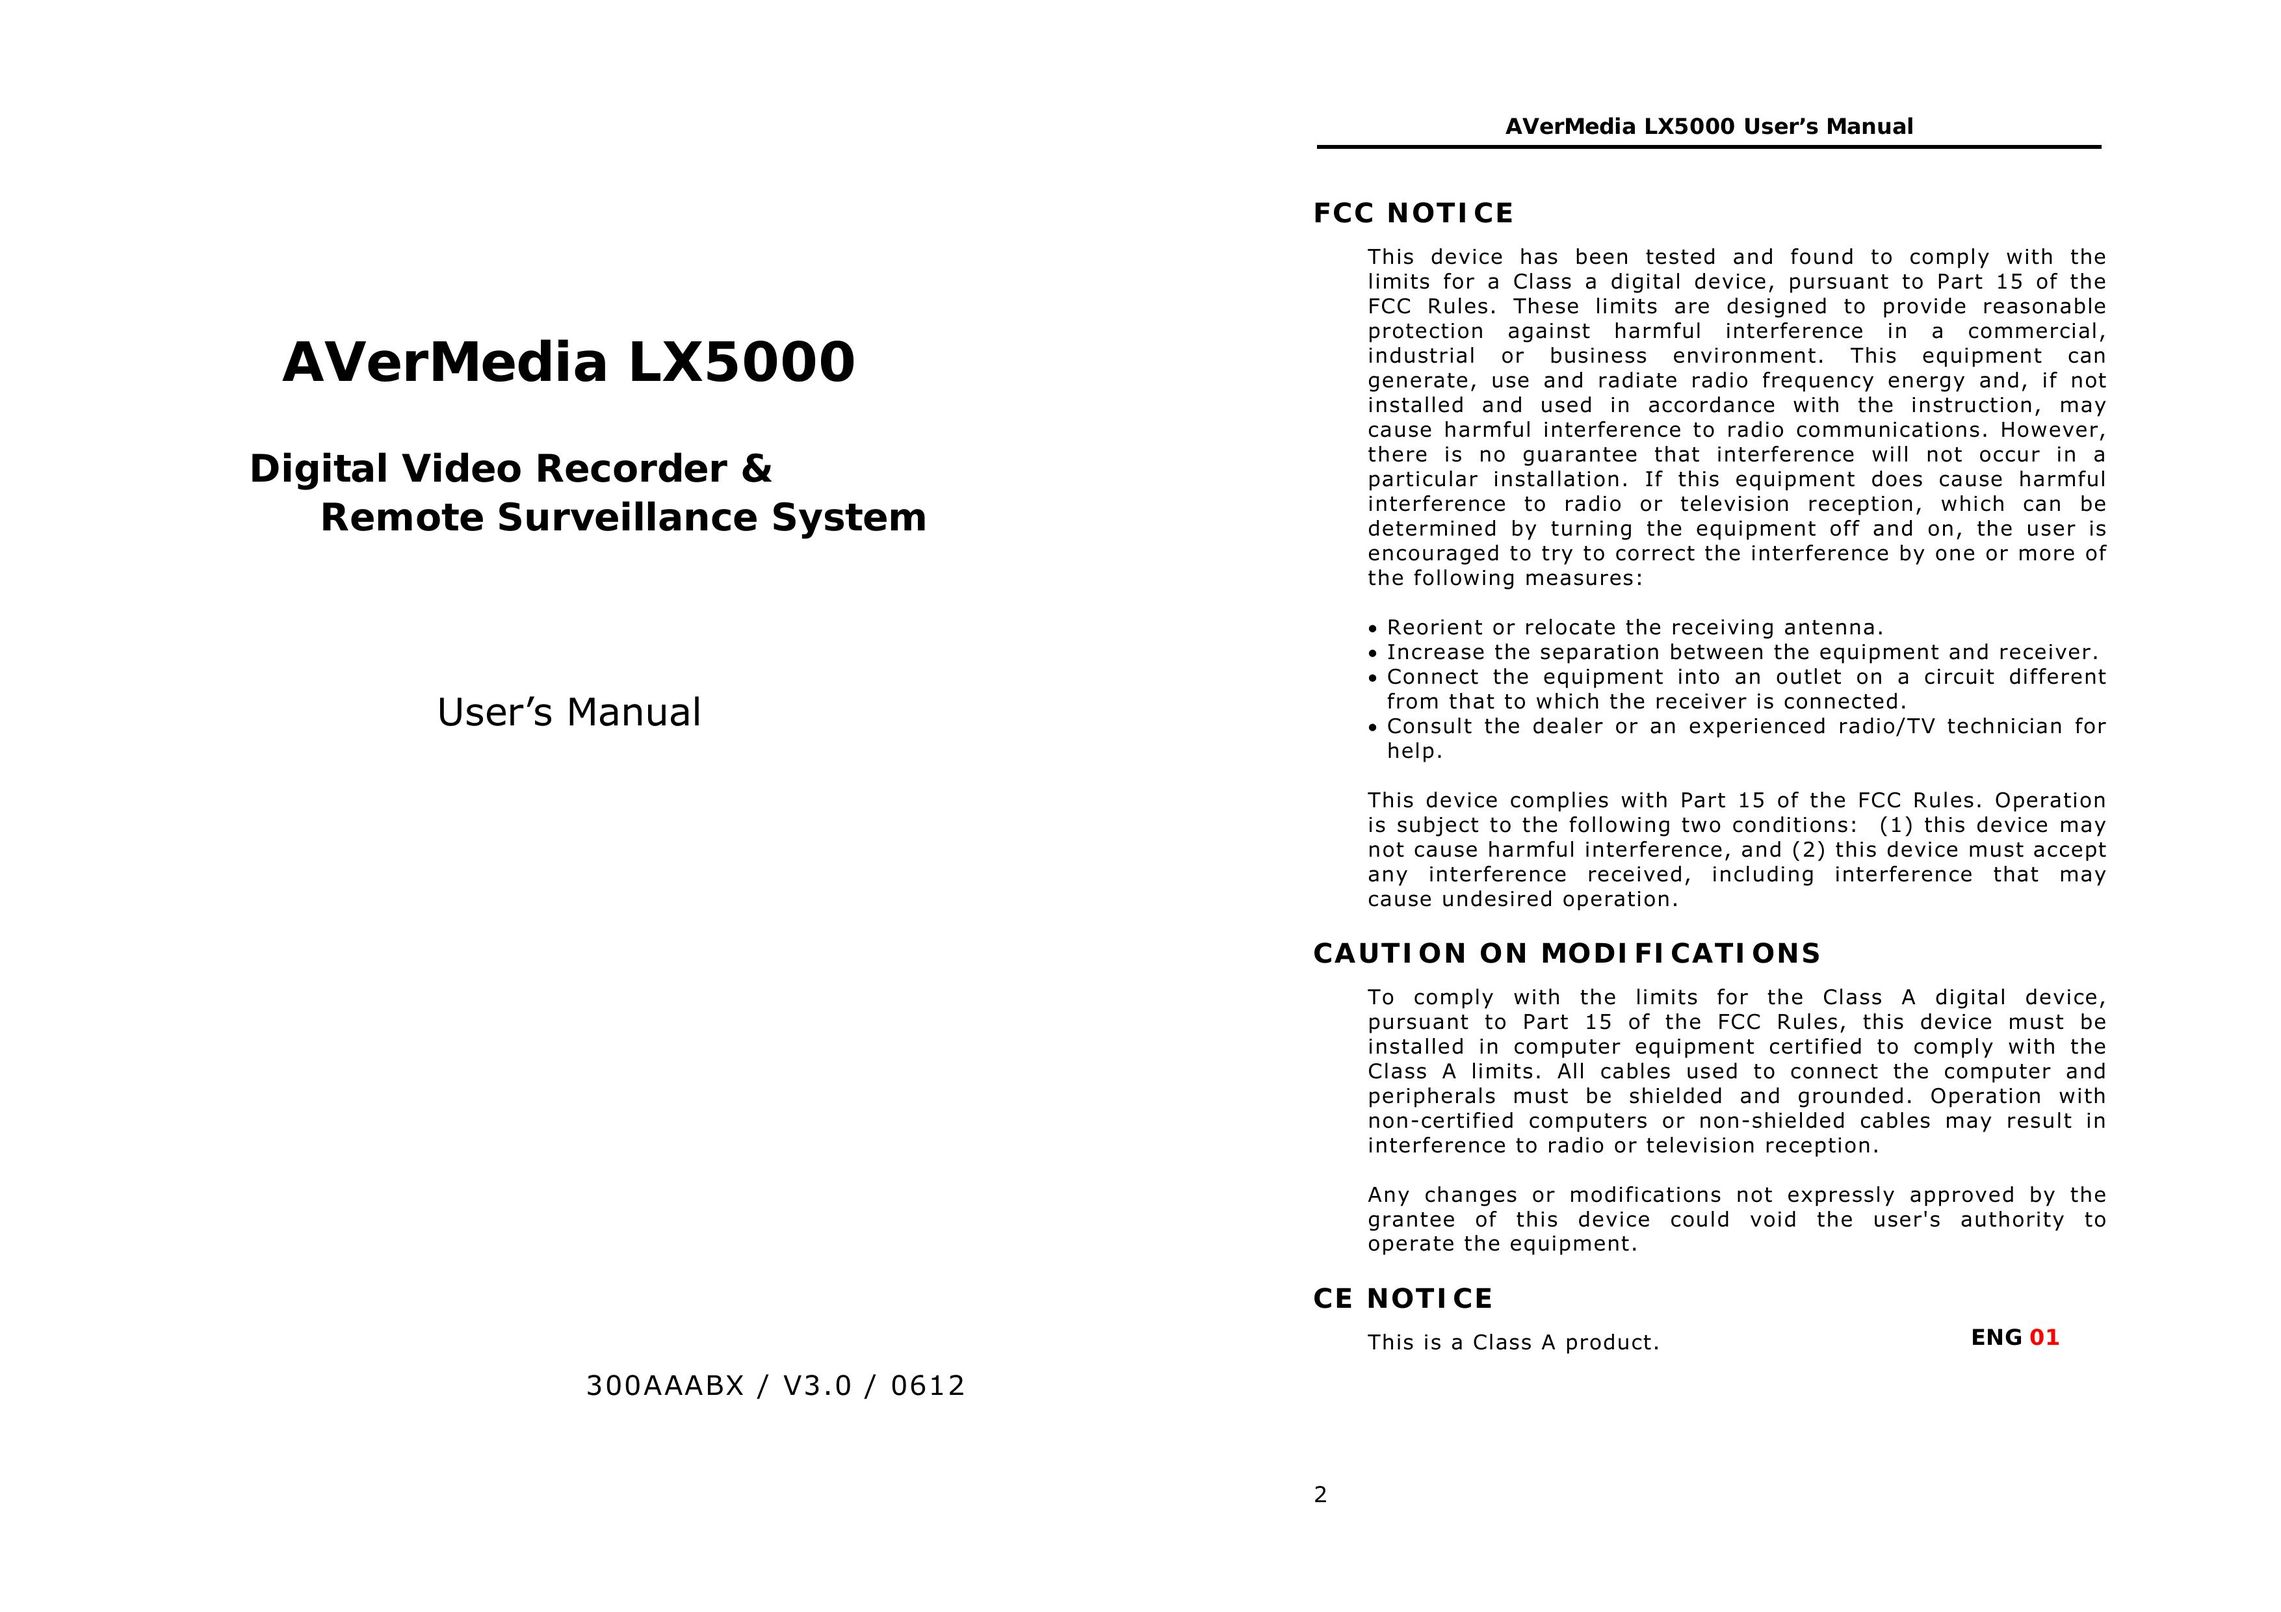 AVerMedia Technologies LX5000 DVR User Manual